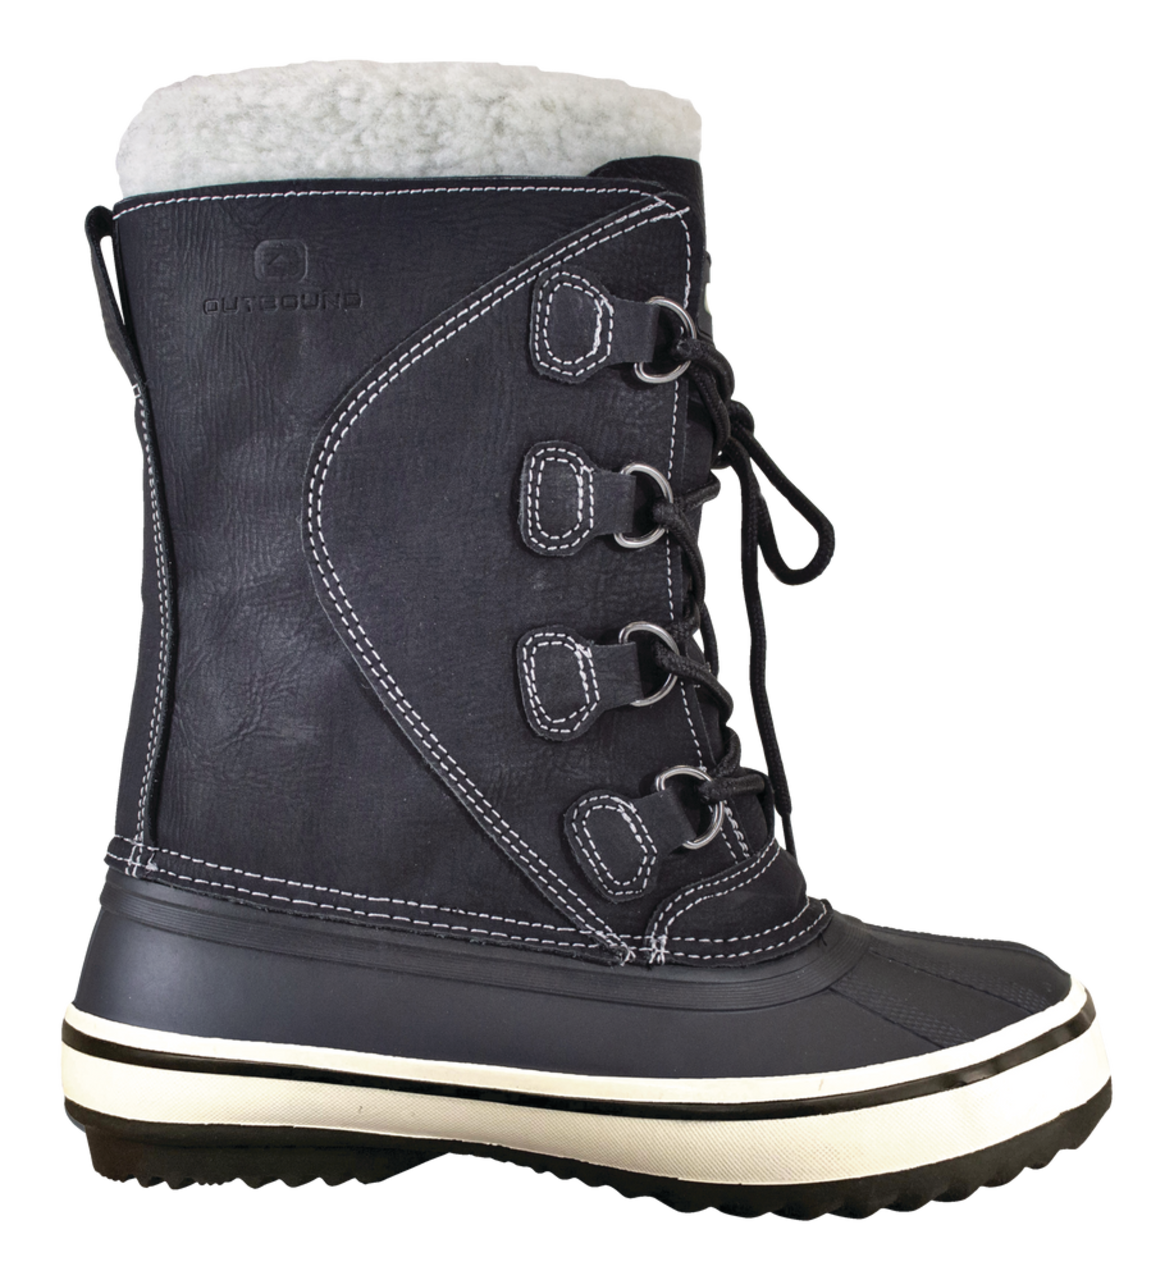 https://media-www.canadiantire.ca/product/playing/footwear-apparel/winter-footwear-apparel/1873075/outbound-women-s-cascade-boot-6-9a480f25-9131-426d-84c5-d76c2d8abc96.png?imdensity=1&imwidth=1244&impolicy=mZoom